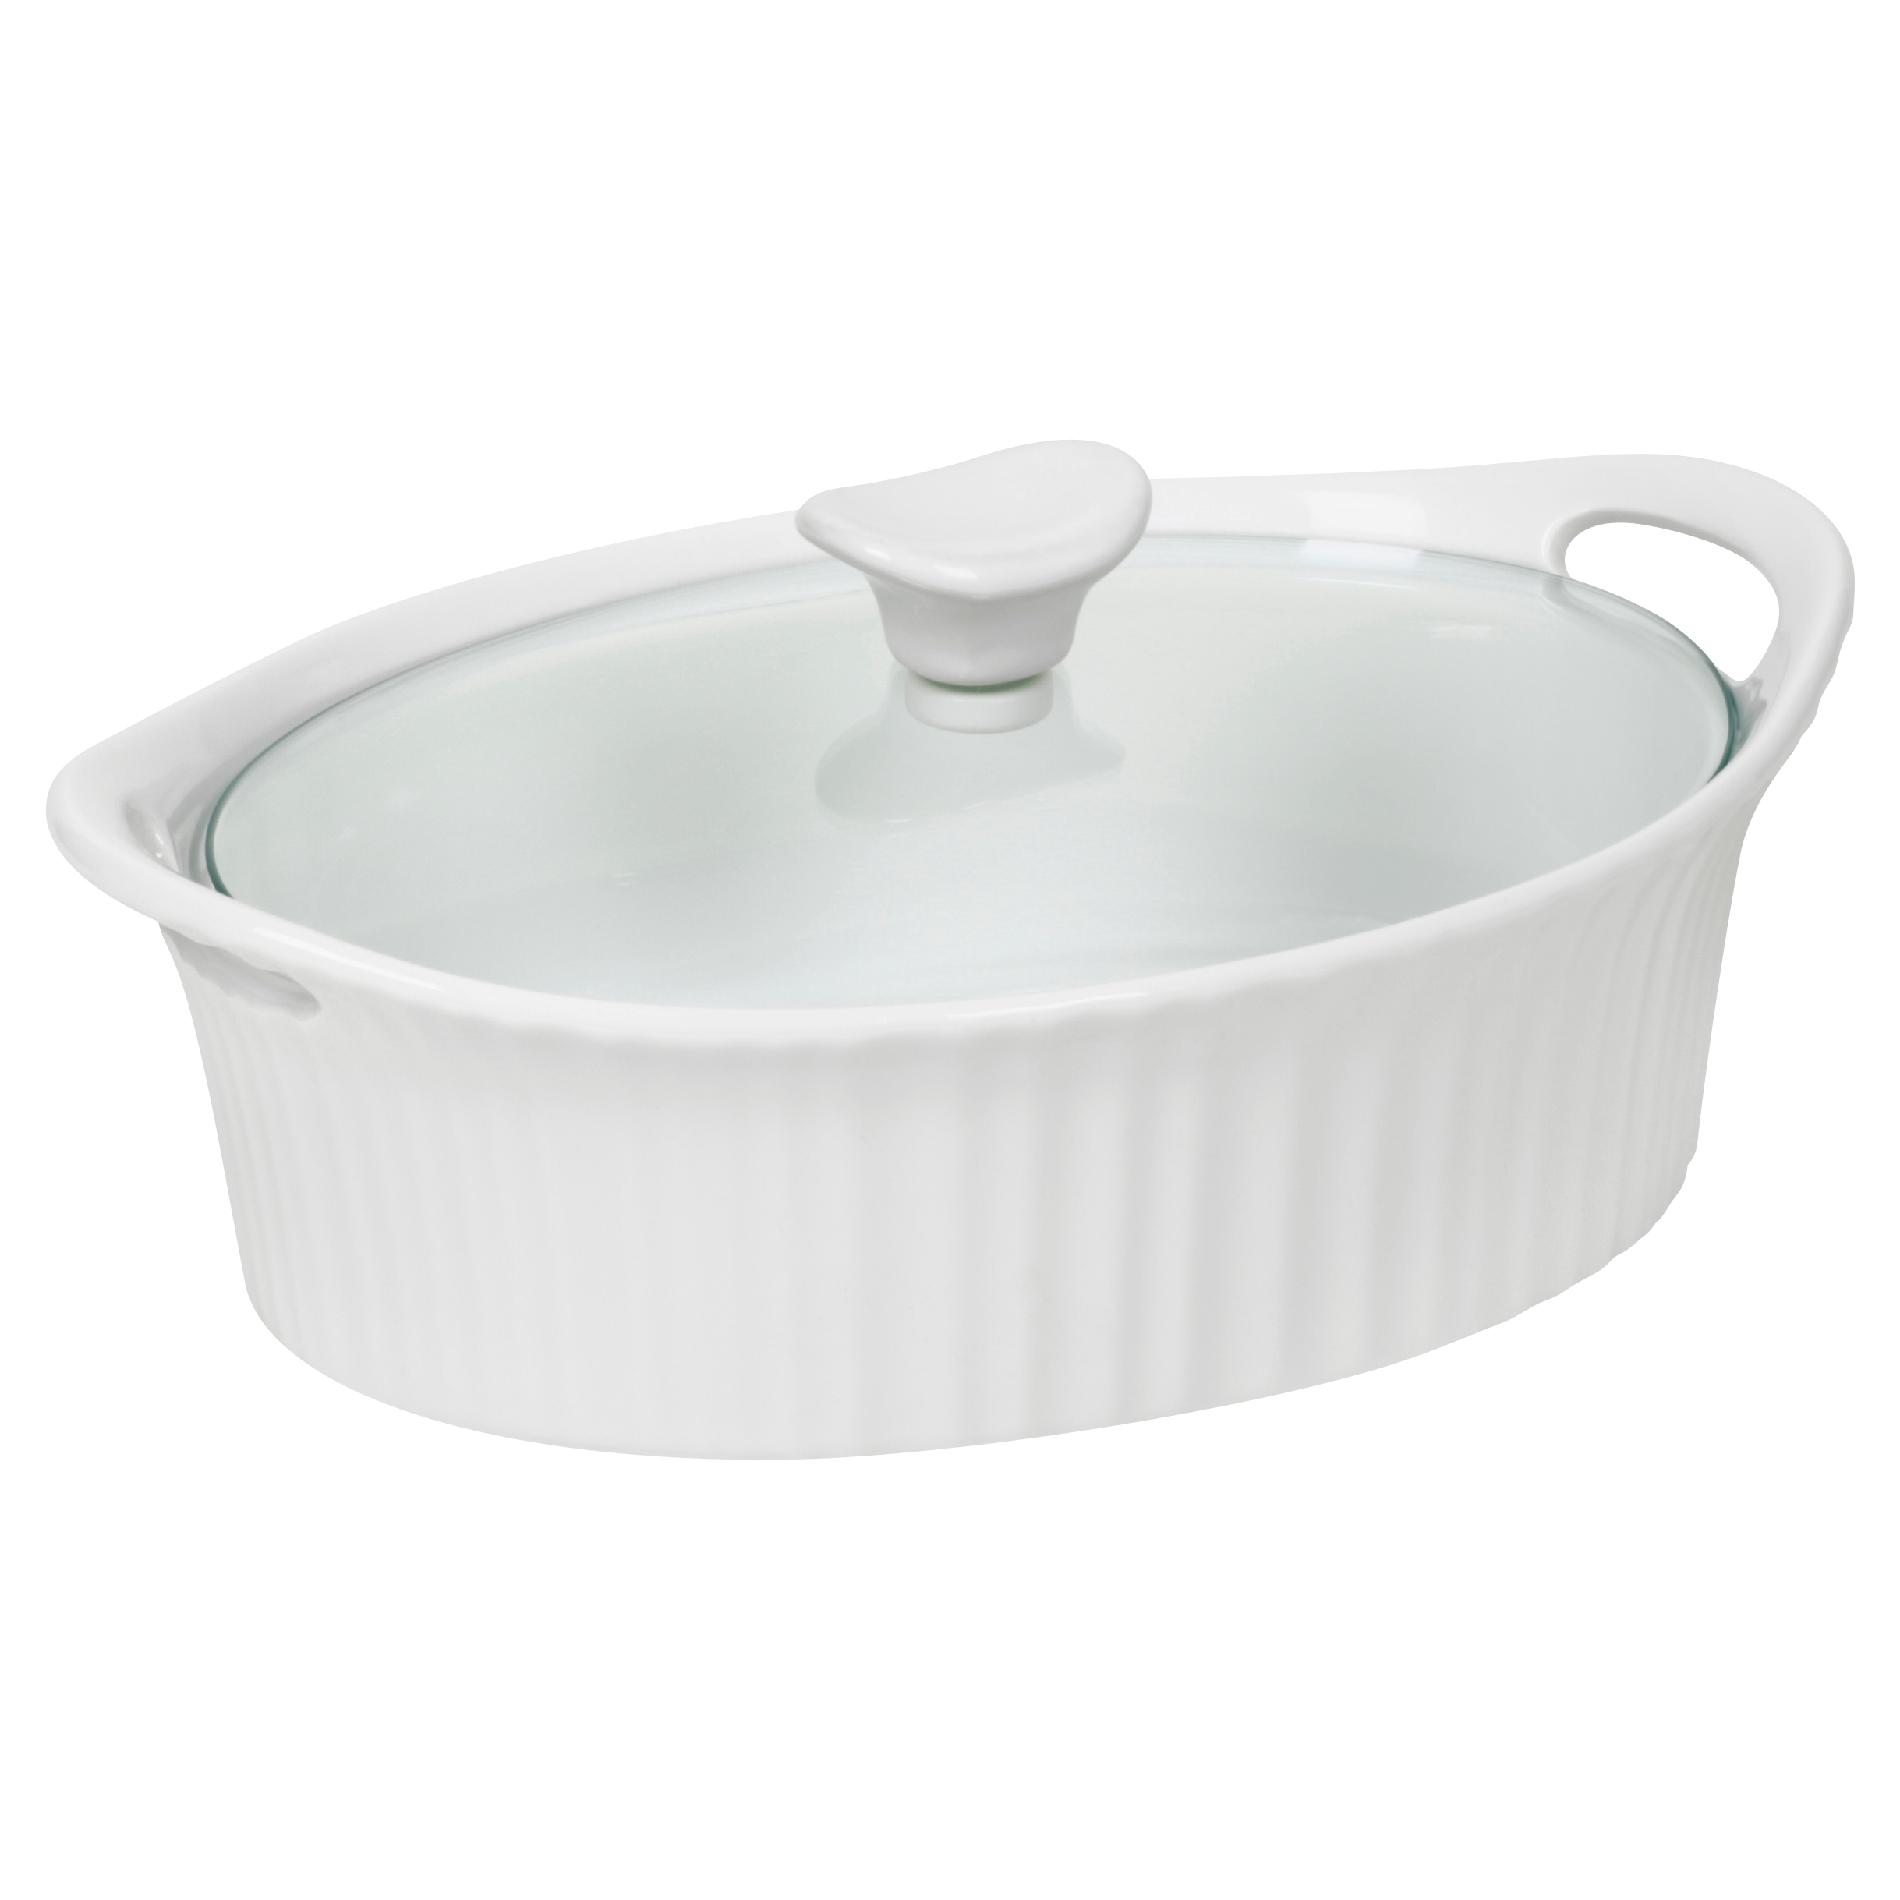 Corningware 1.5-Quart Oval Casserole Dish - French White